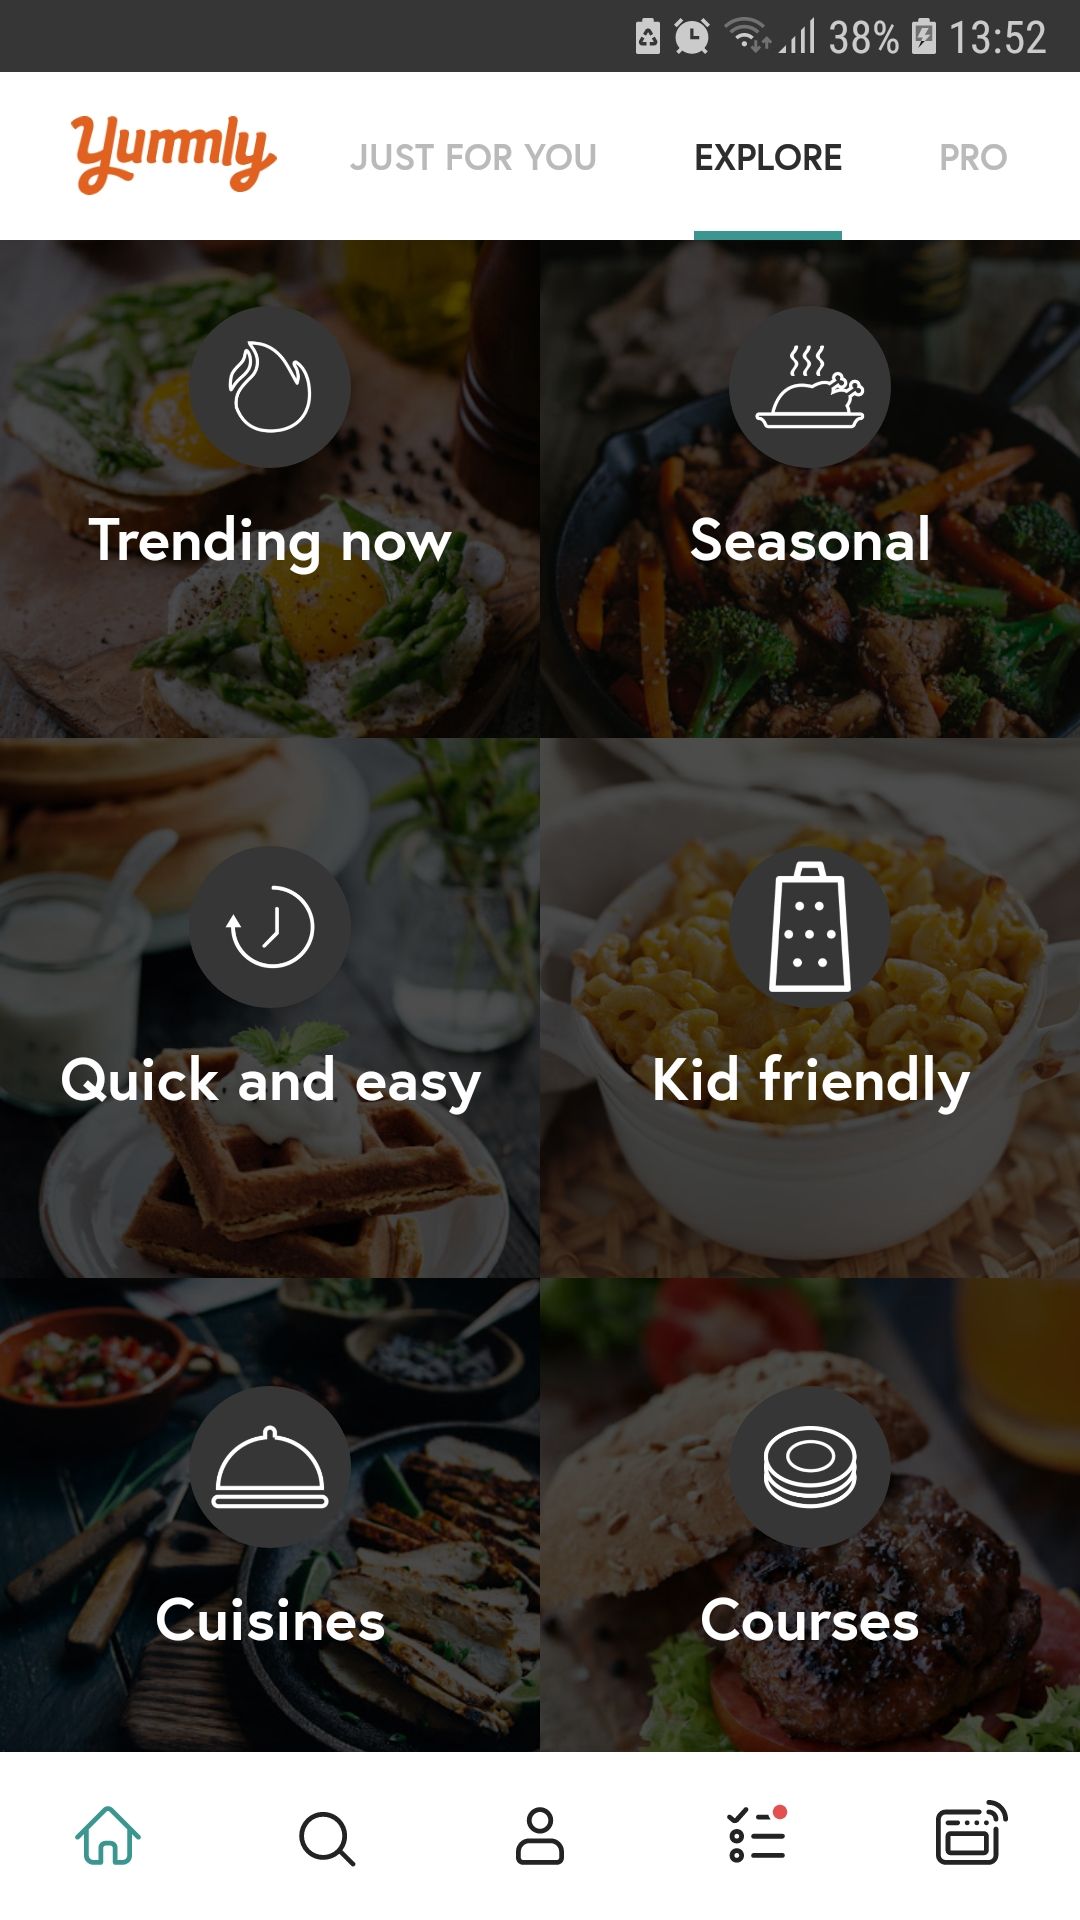 Yummly explore mobile recipes app